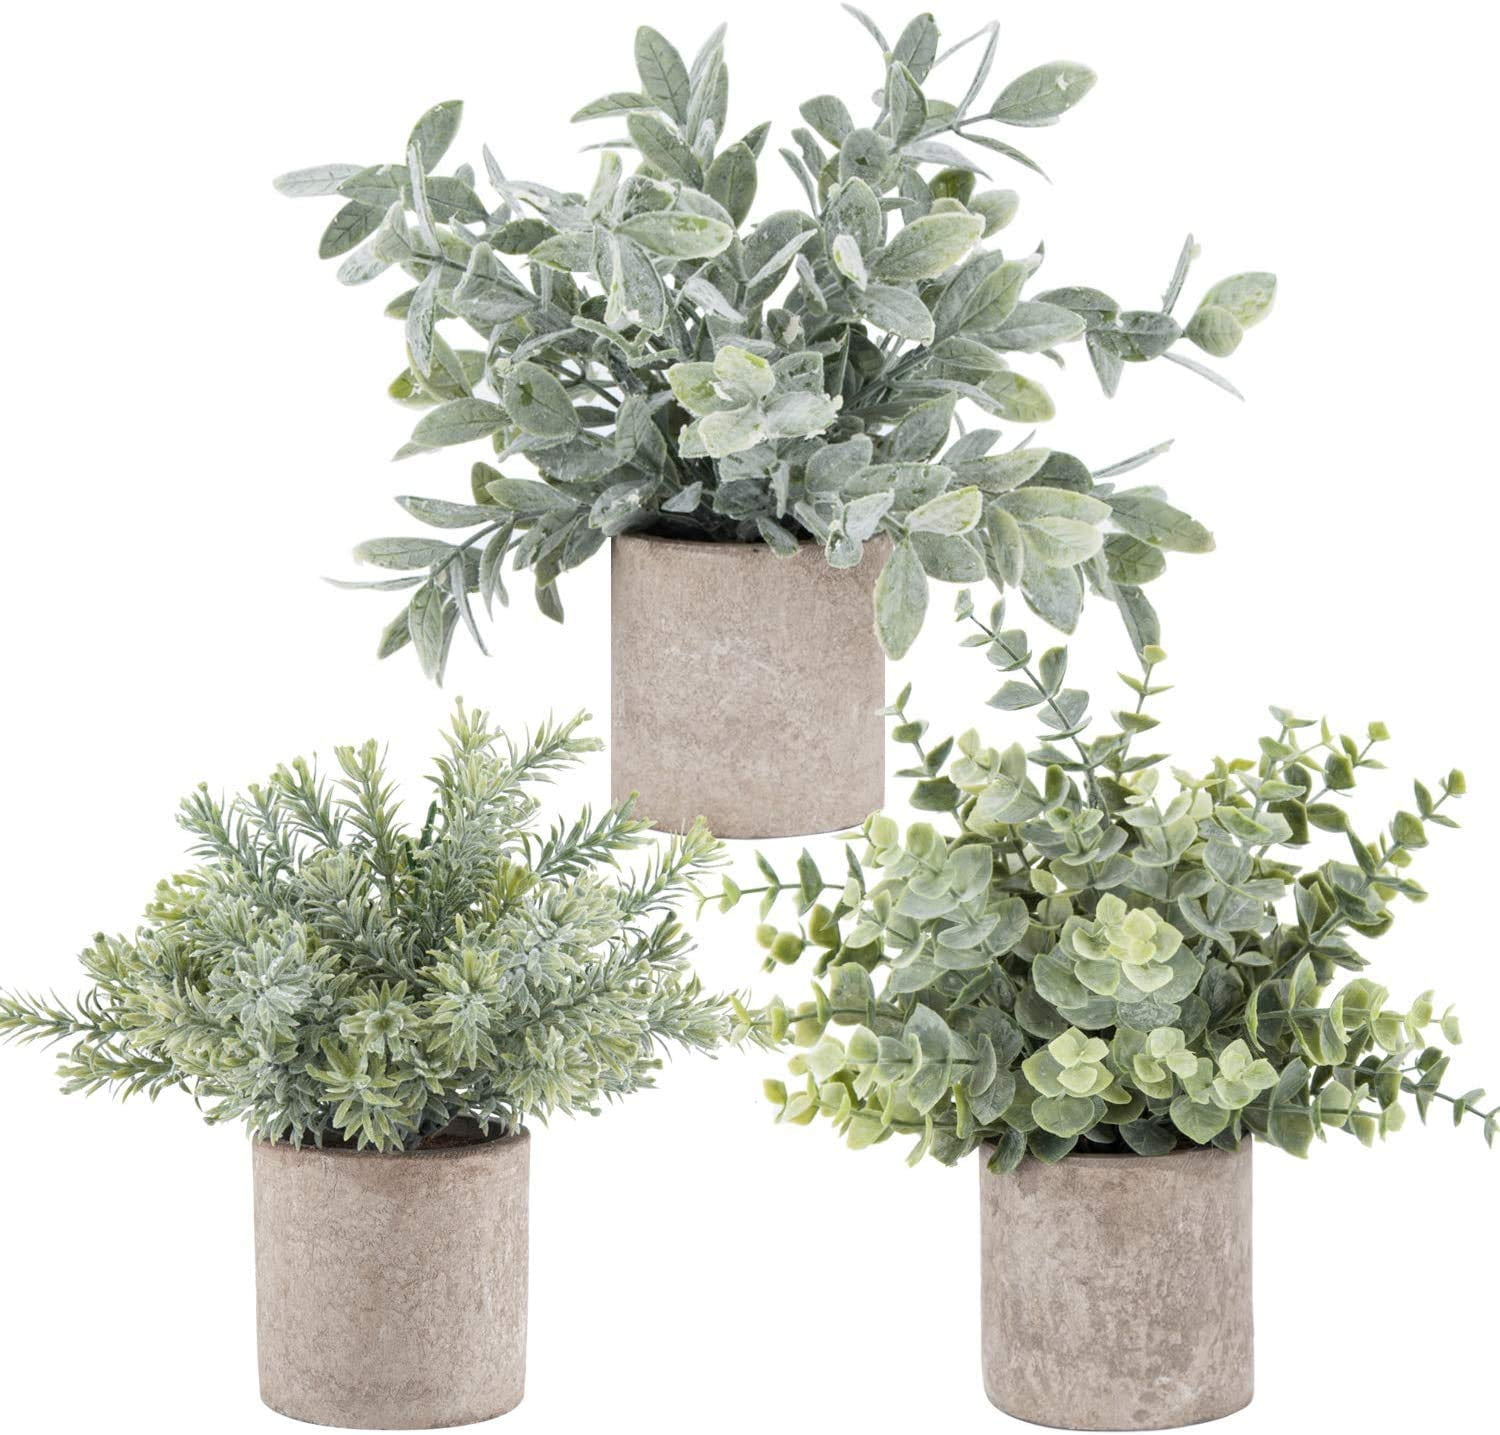 Der Rose 3 Pack Mini Potted Fake Plants Artificial Plastic Eucalyptus